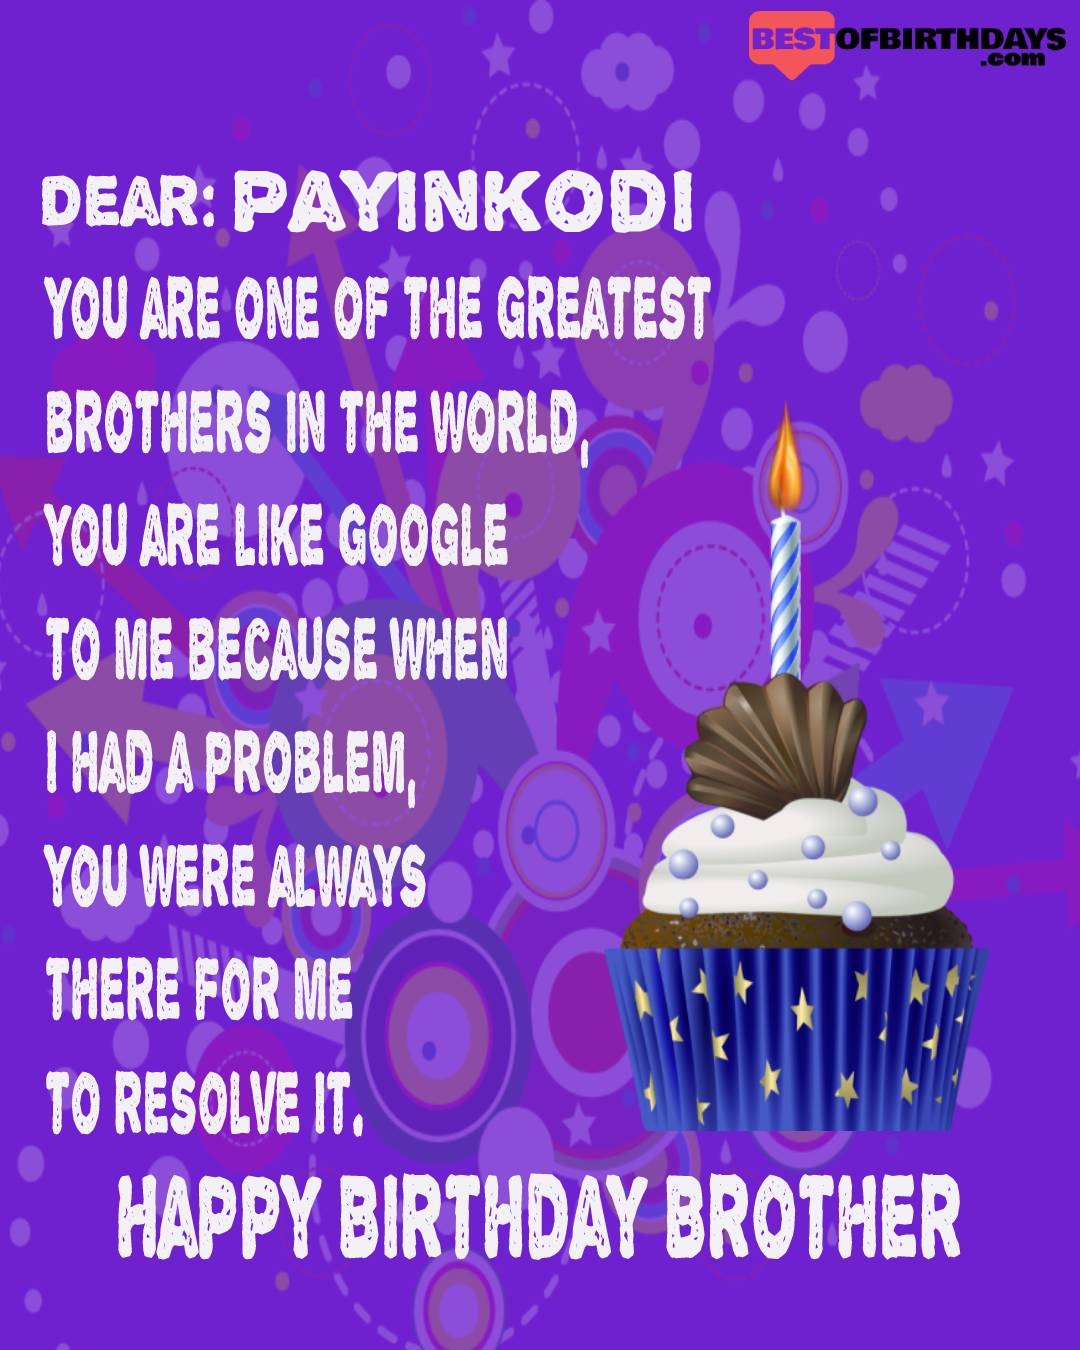 Happy birthday payinkodi bhai brother bro